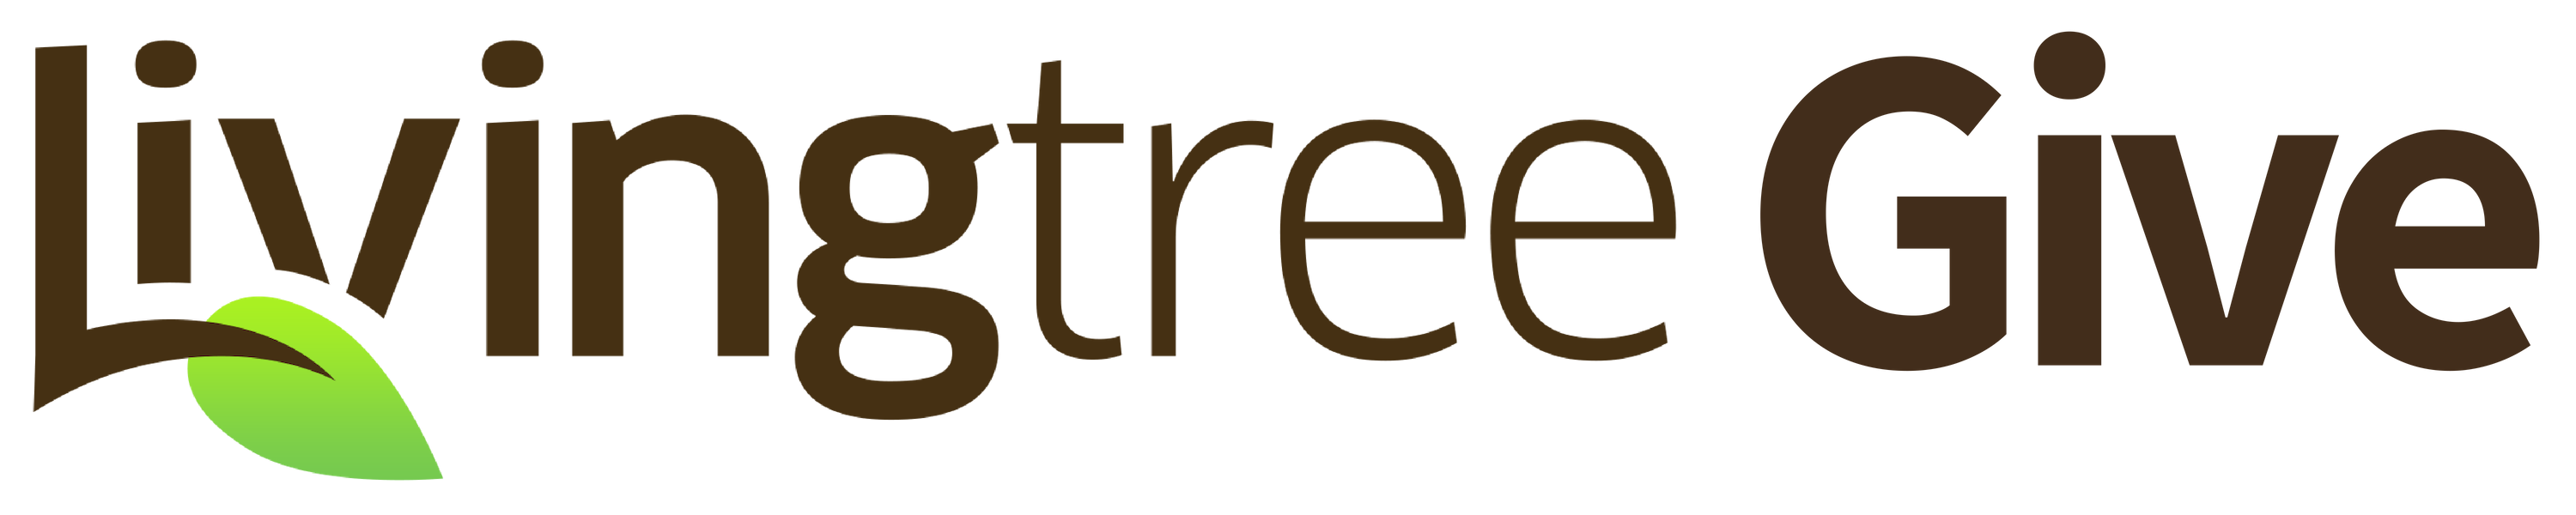 Livingtree Give, online fundraising management